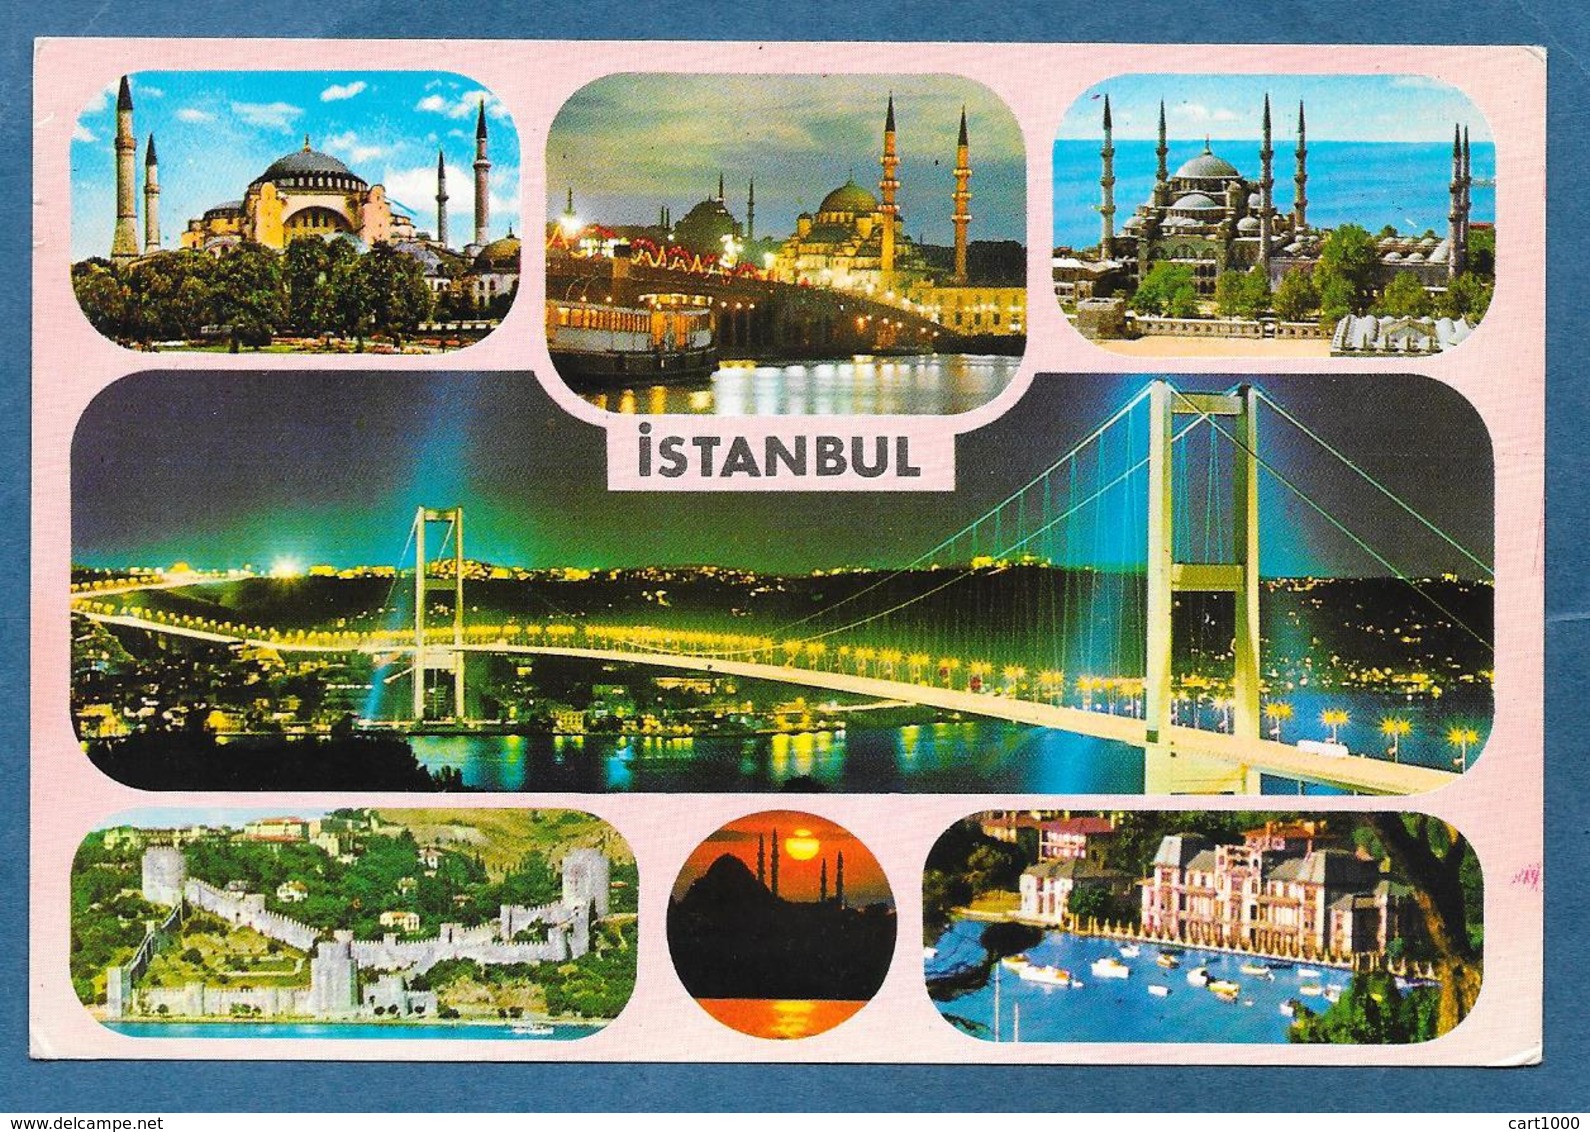 TURKEY ISTANBUL SEHIRDEN MUHTELIF GORUNUSLER 1986 - Turchia